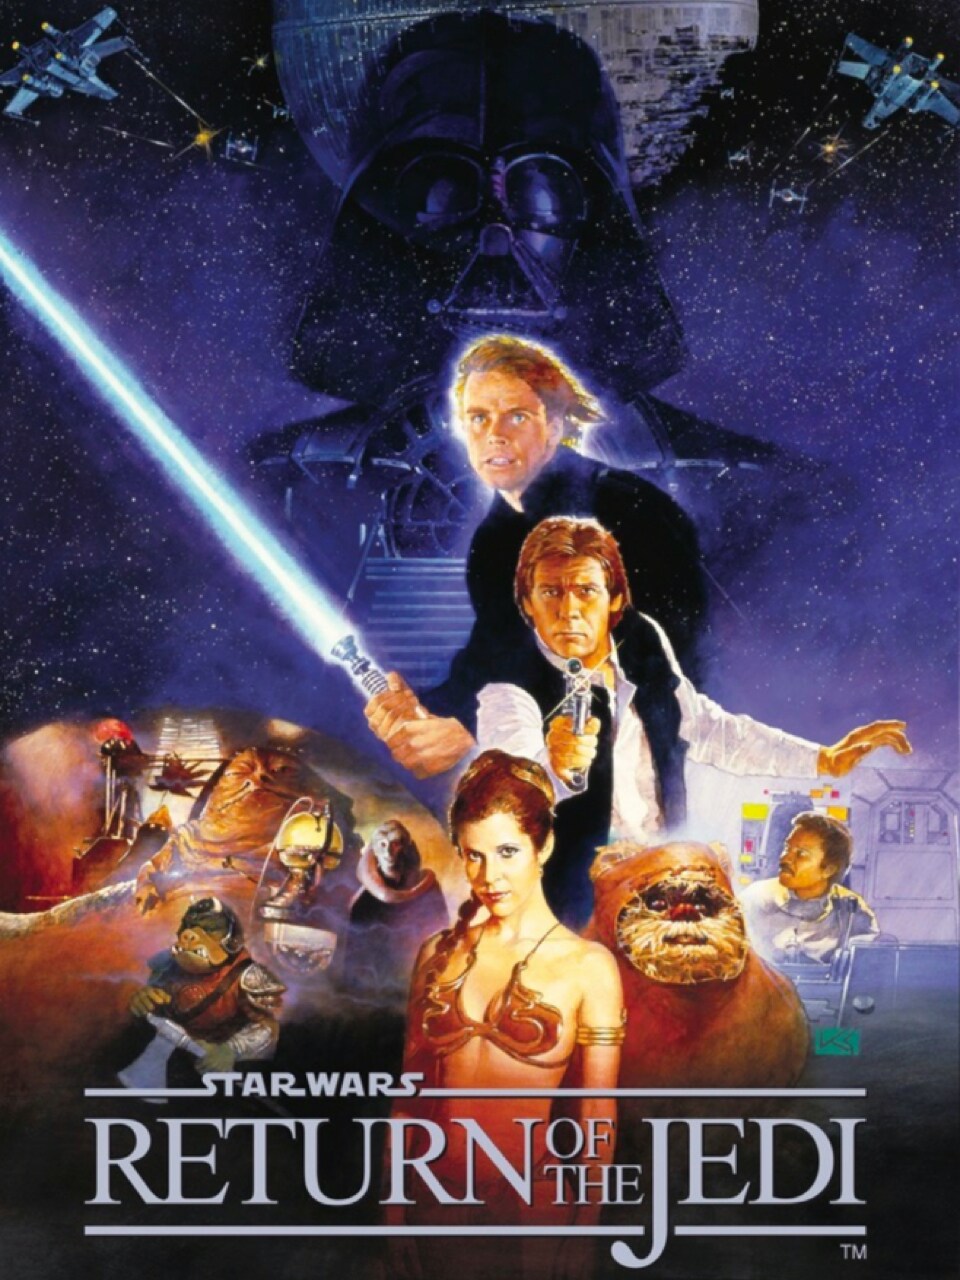 Return of the Jedi concert poster